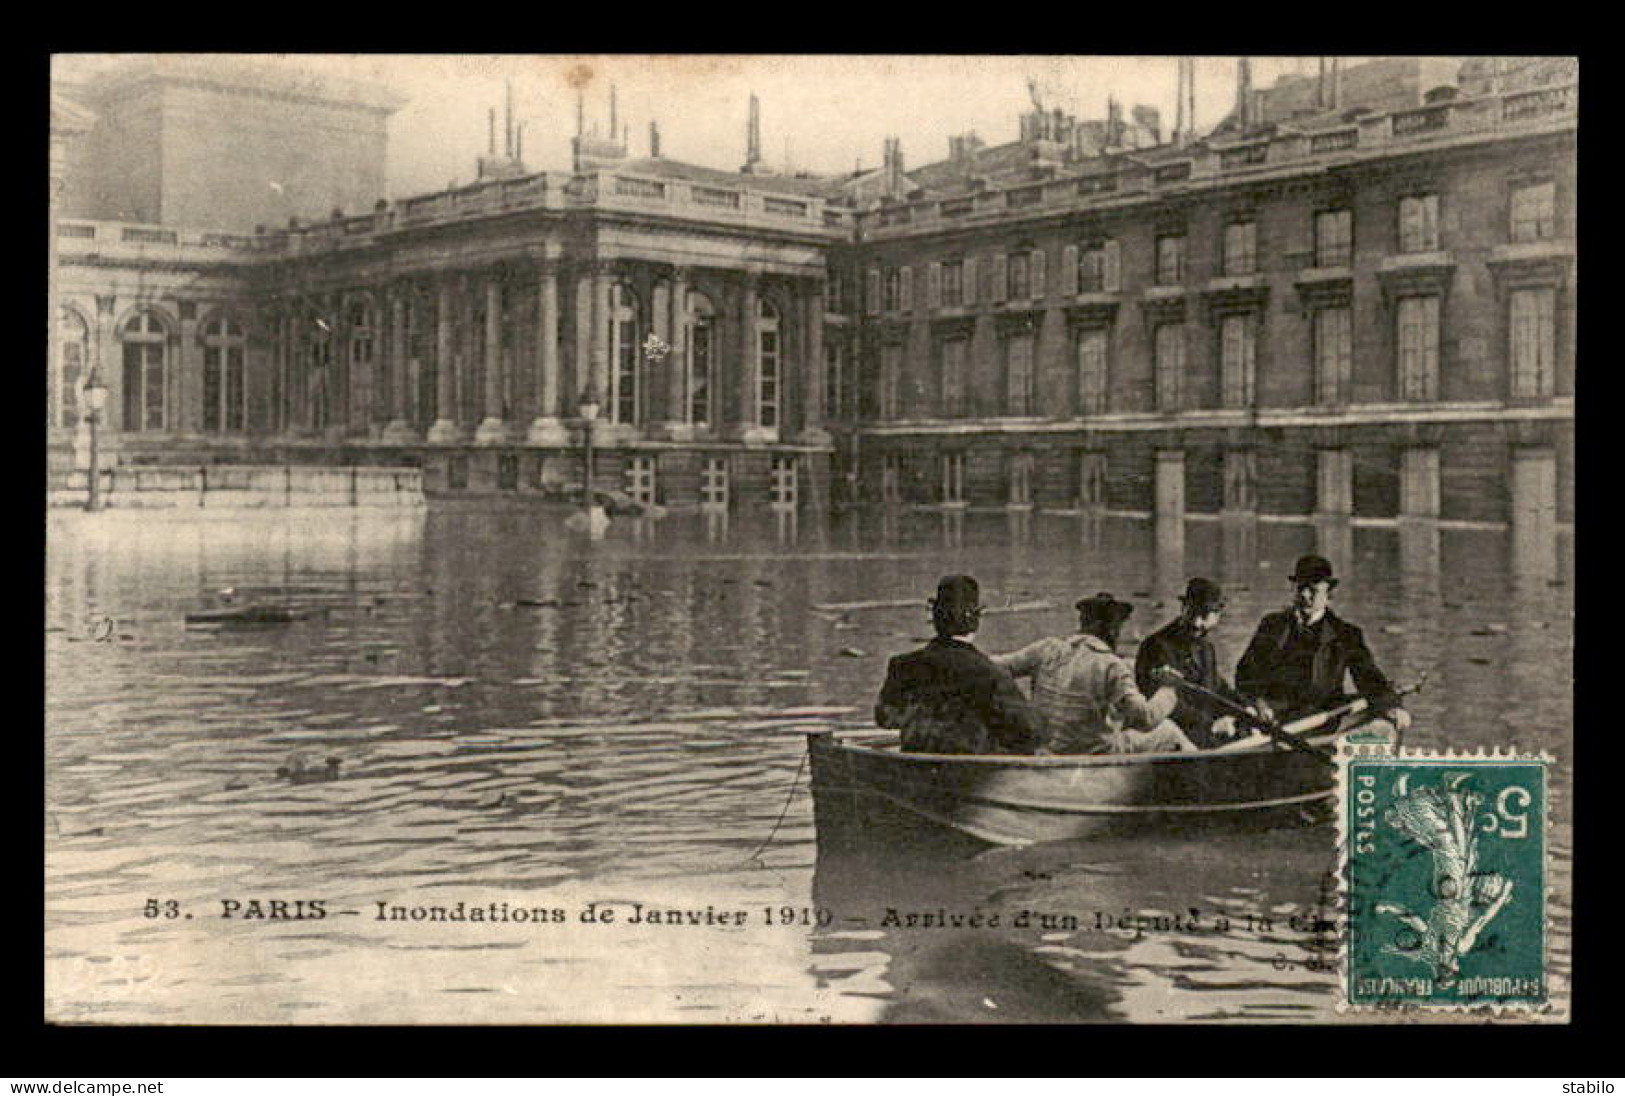 75 - PARIS - INONDATIONS DE JANVIER 1910 - ARRIVEE EN BARQUE D'UN DEPUTE A LA CHAMBRE  - De Overstroming Van 1910